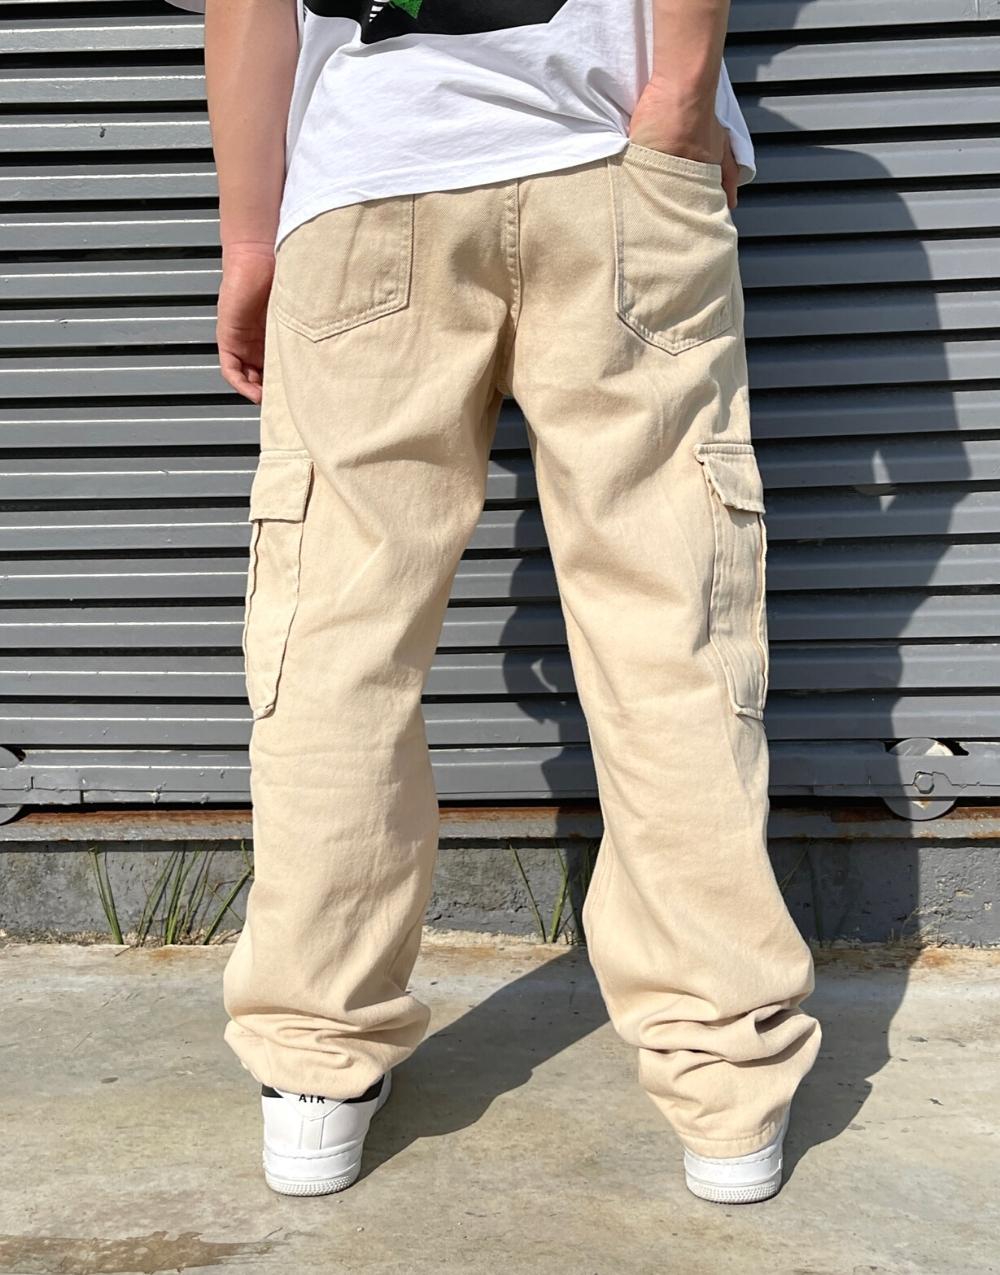 Buy YGdeals Men's Regular Fit Cotton Pants (YG-CARGO-0001_Multicolour_28)  at Amazon.in